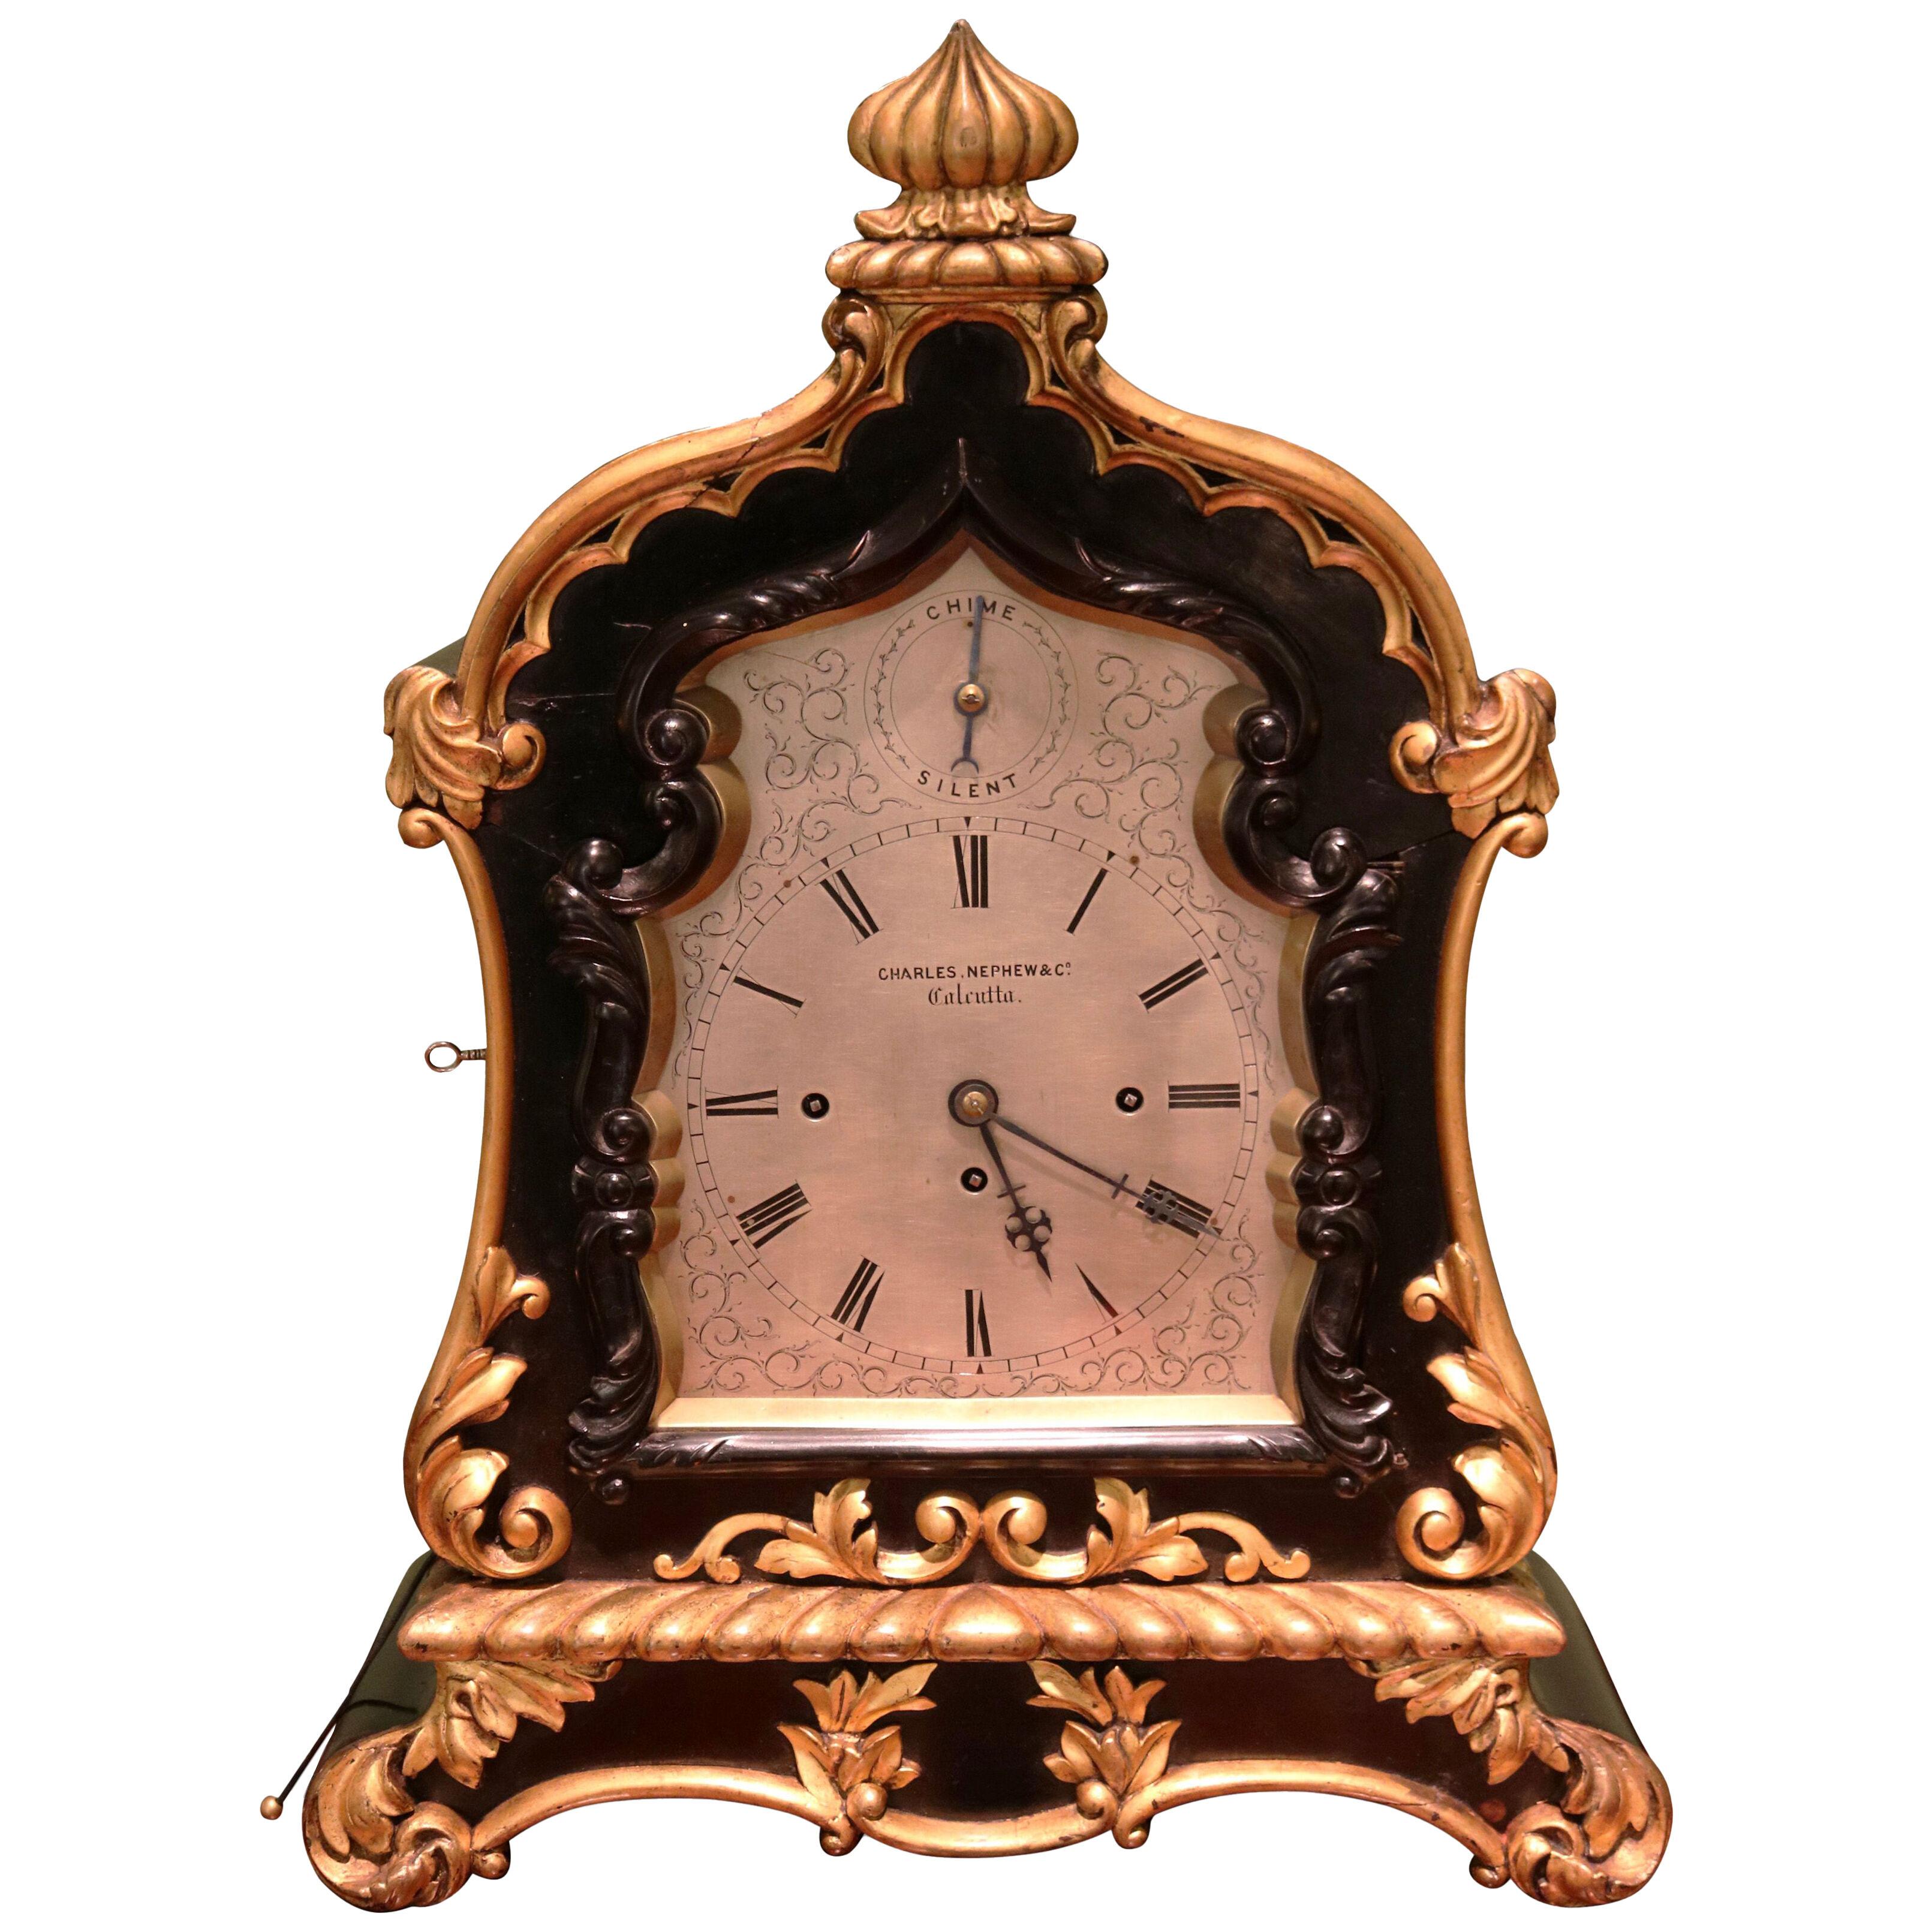 A mid 19th century striking bracket clock by Charles, Nephew & Co Calcutta